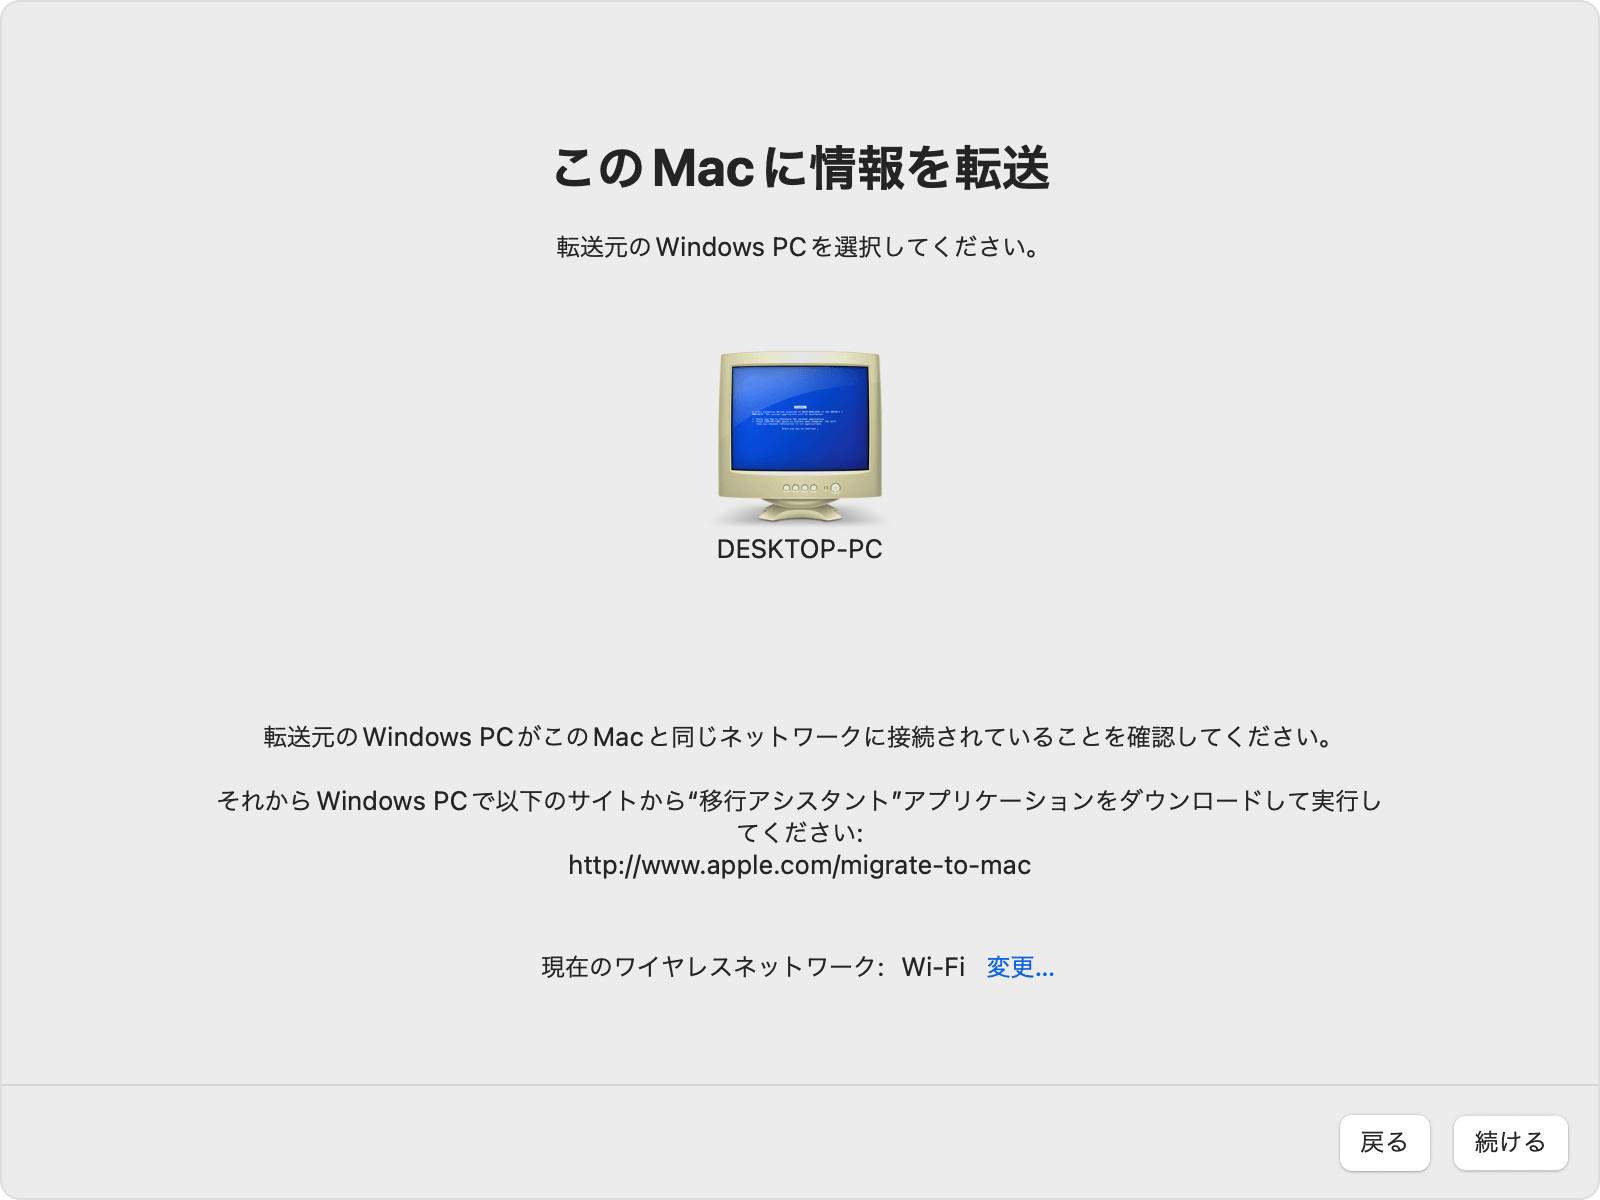 Mac の移行アシスタント：Windows パソコンの選択画面